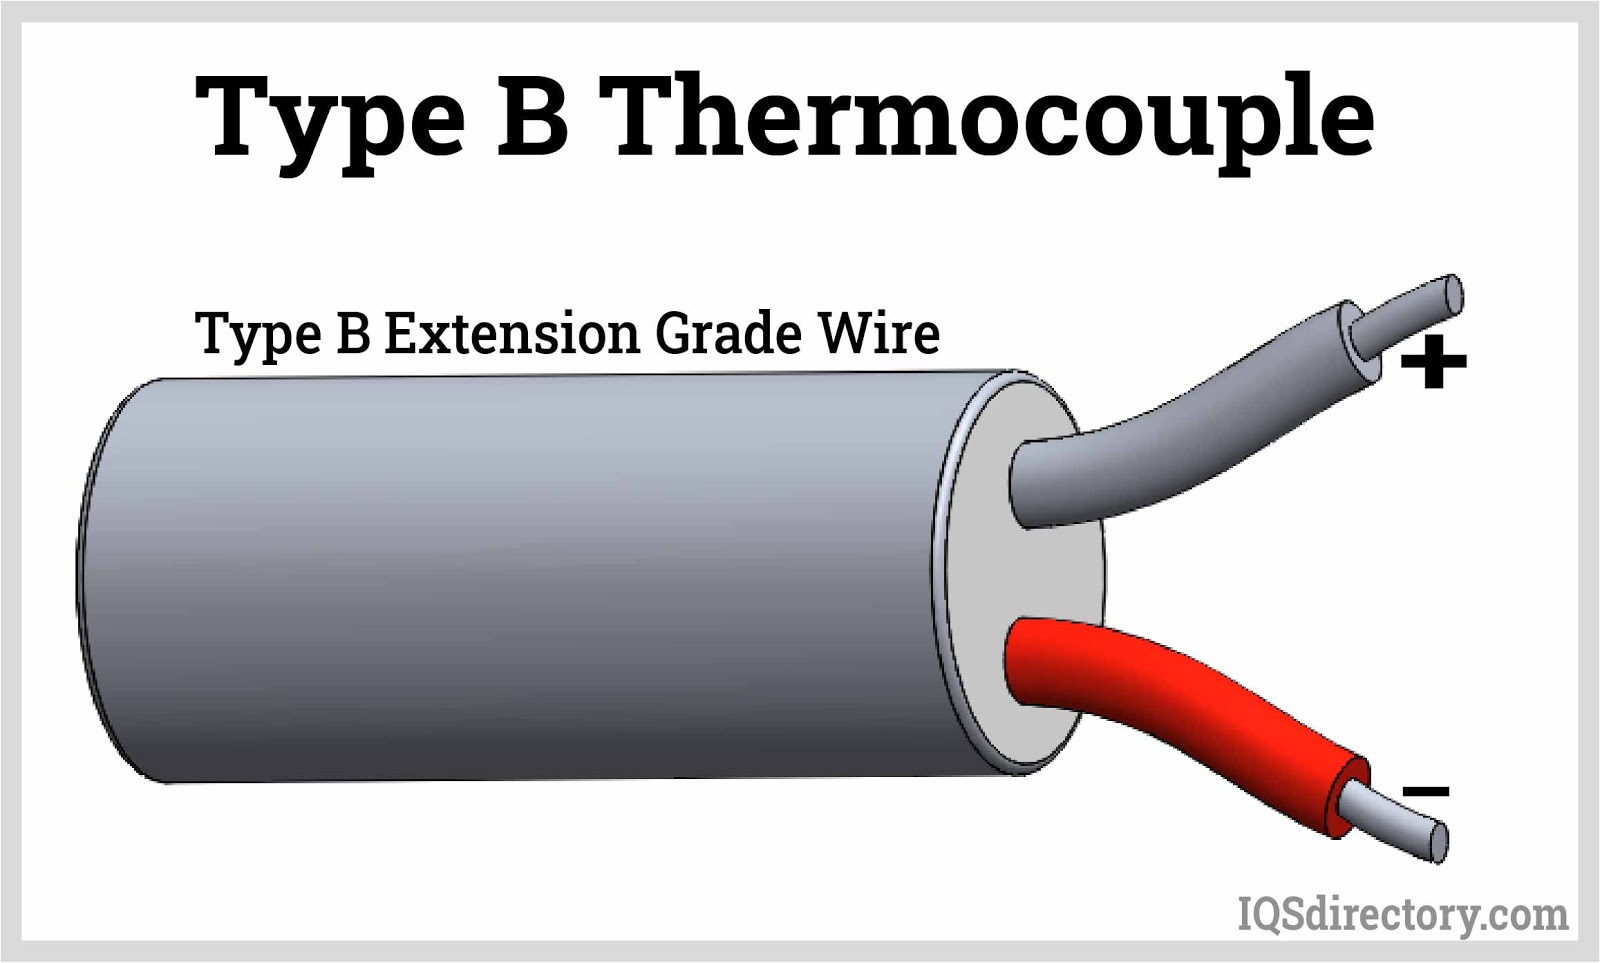 Type B Thermocouple